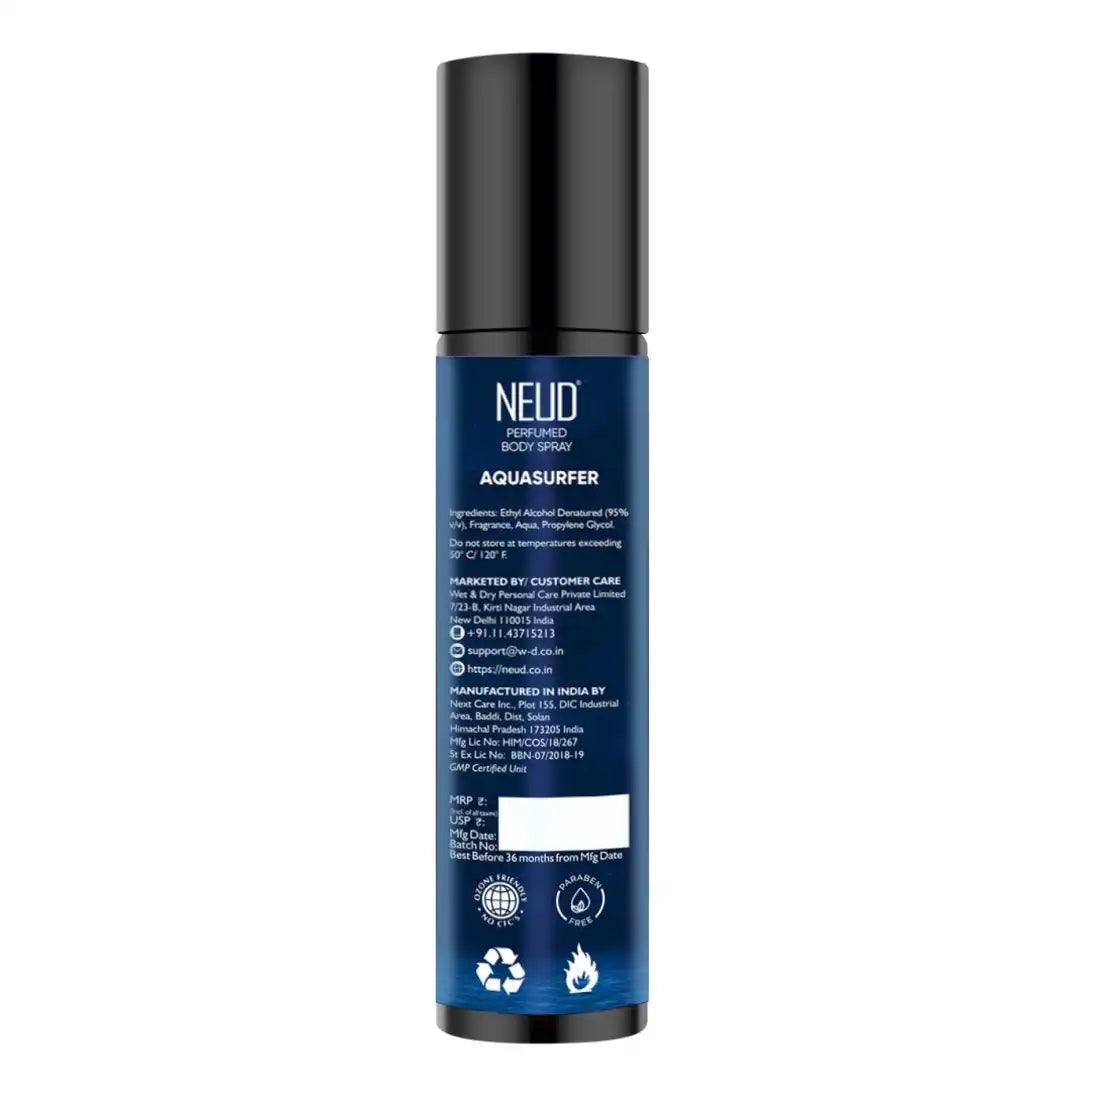 NEUD Aquasurfer Perfumed Body Spray for Men is Shipped Worldwide - everteen-neud.com